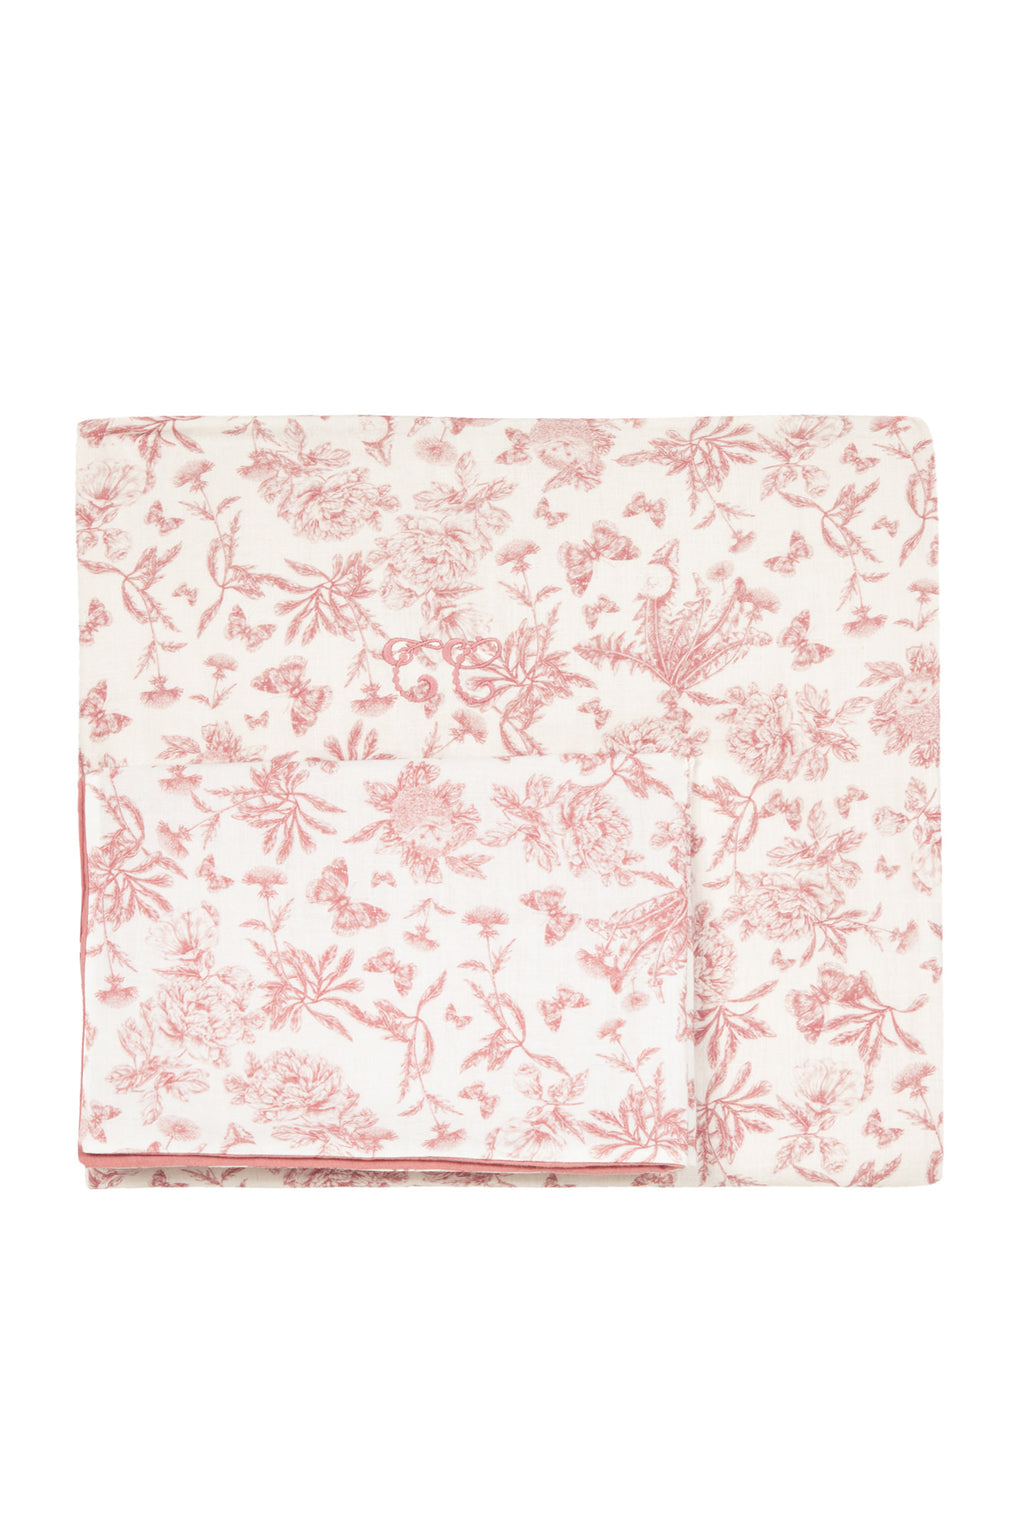 Bed linen set - Print inspiration Toile de Jouy Pink